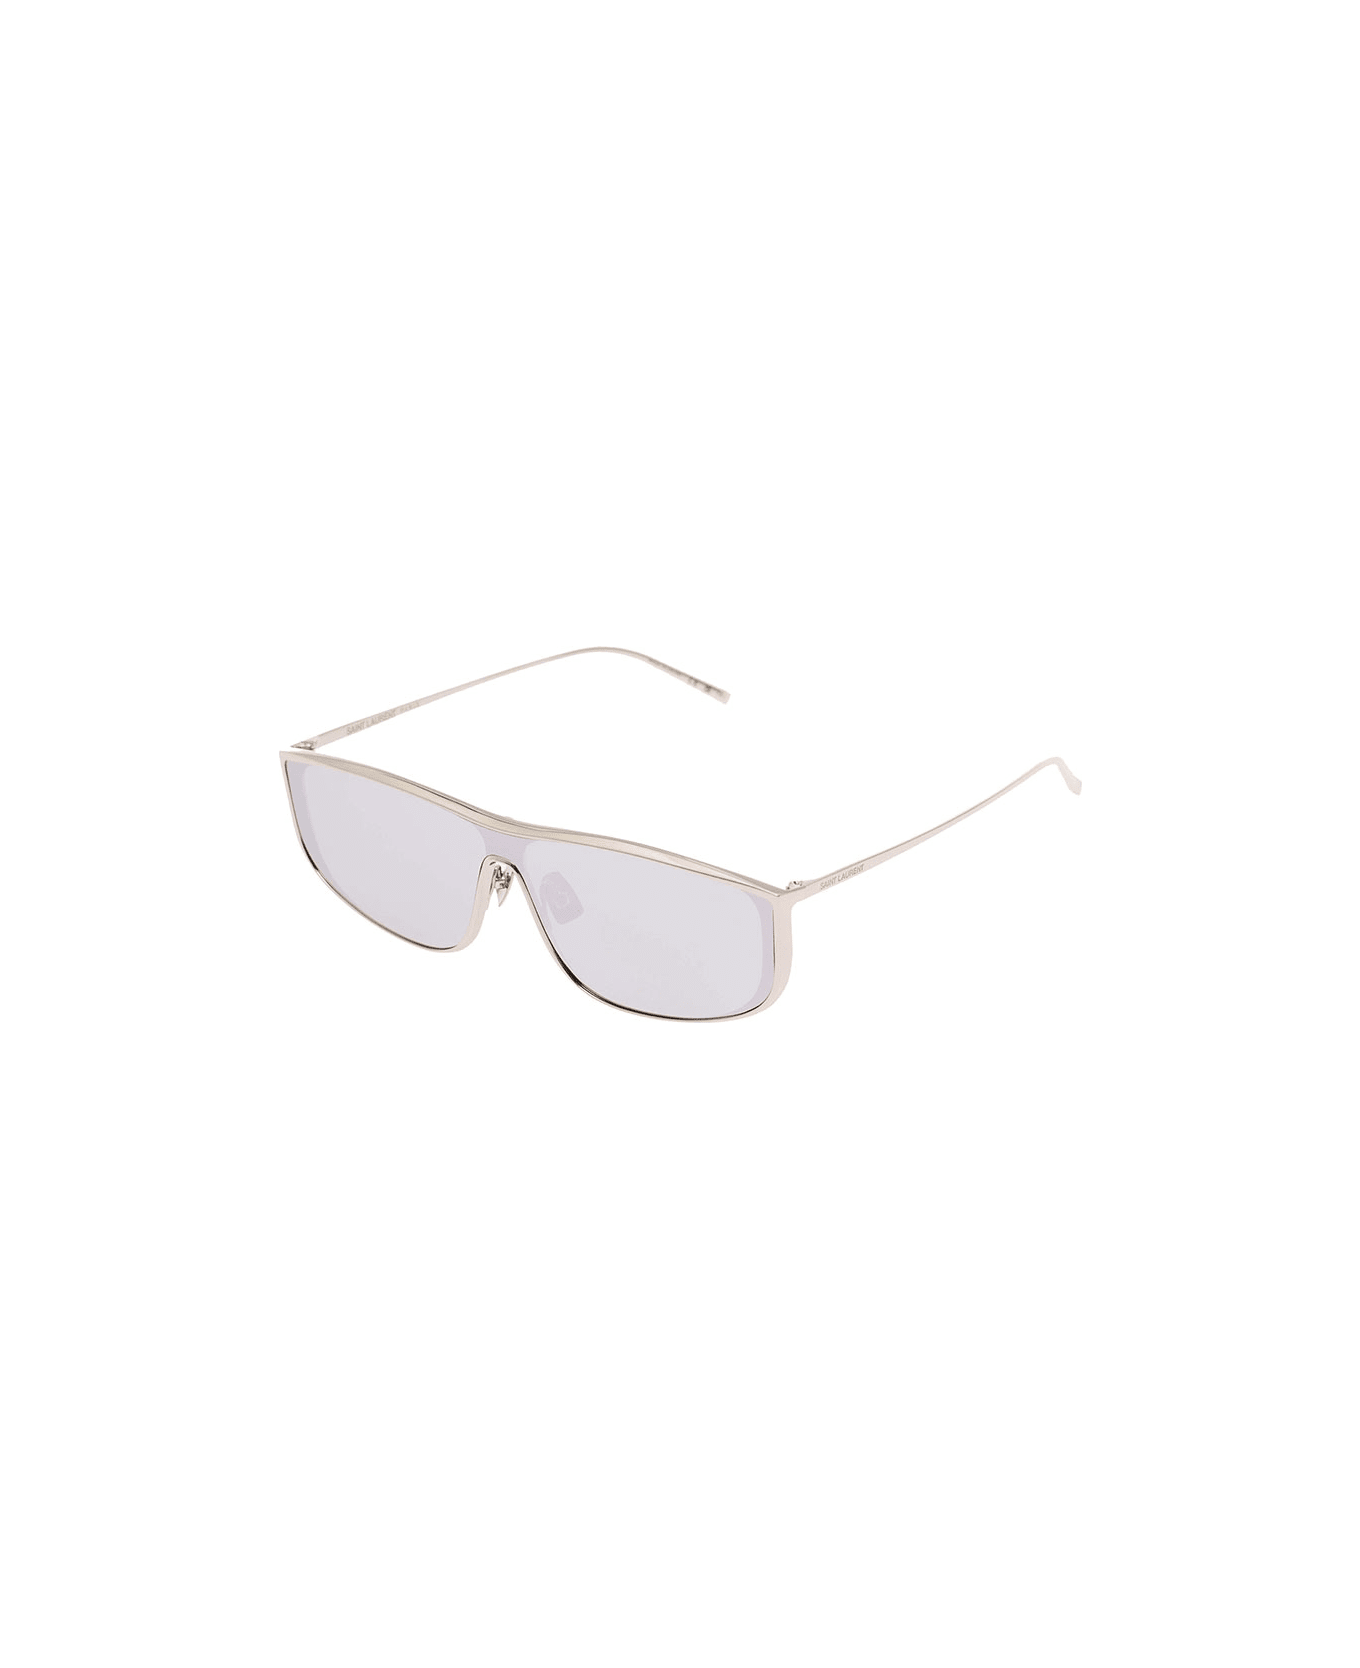 Saint Laurent Sl 605 Luna Sunglasses In Silver-tone Acetate Woman - Metallic